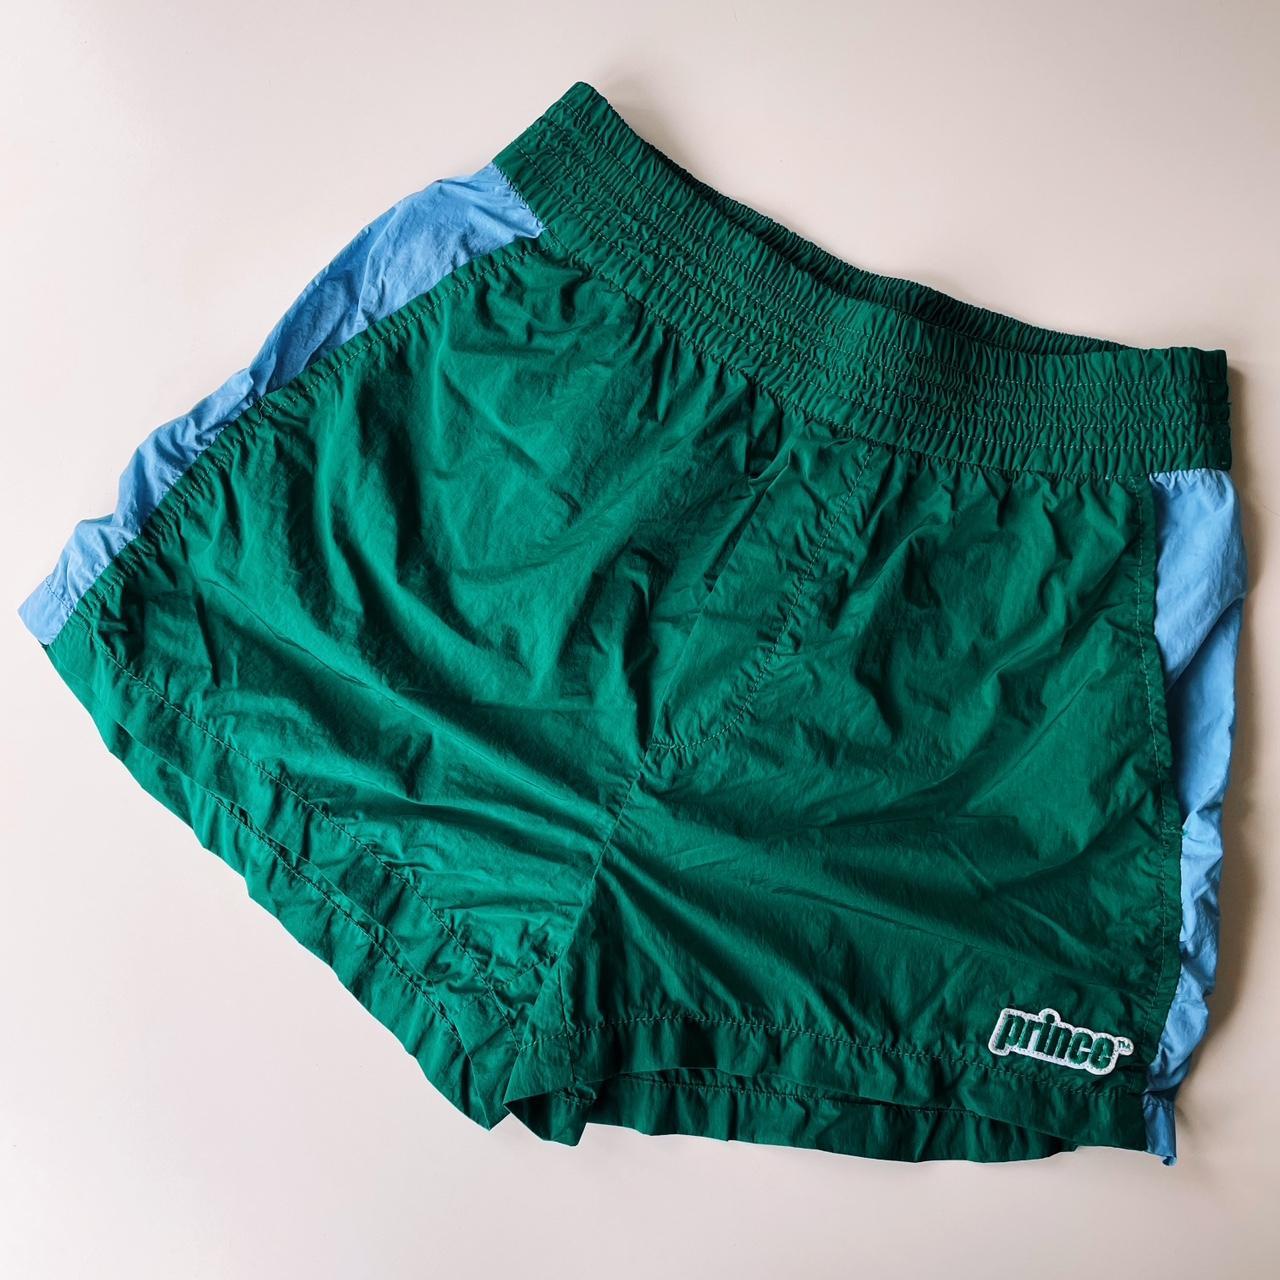 Fila - Astro Terry Cloth Polo - Men's Large - Retro - Depop